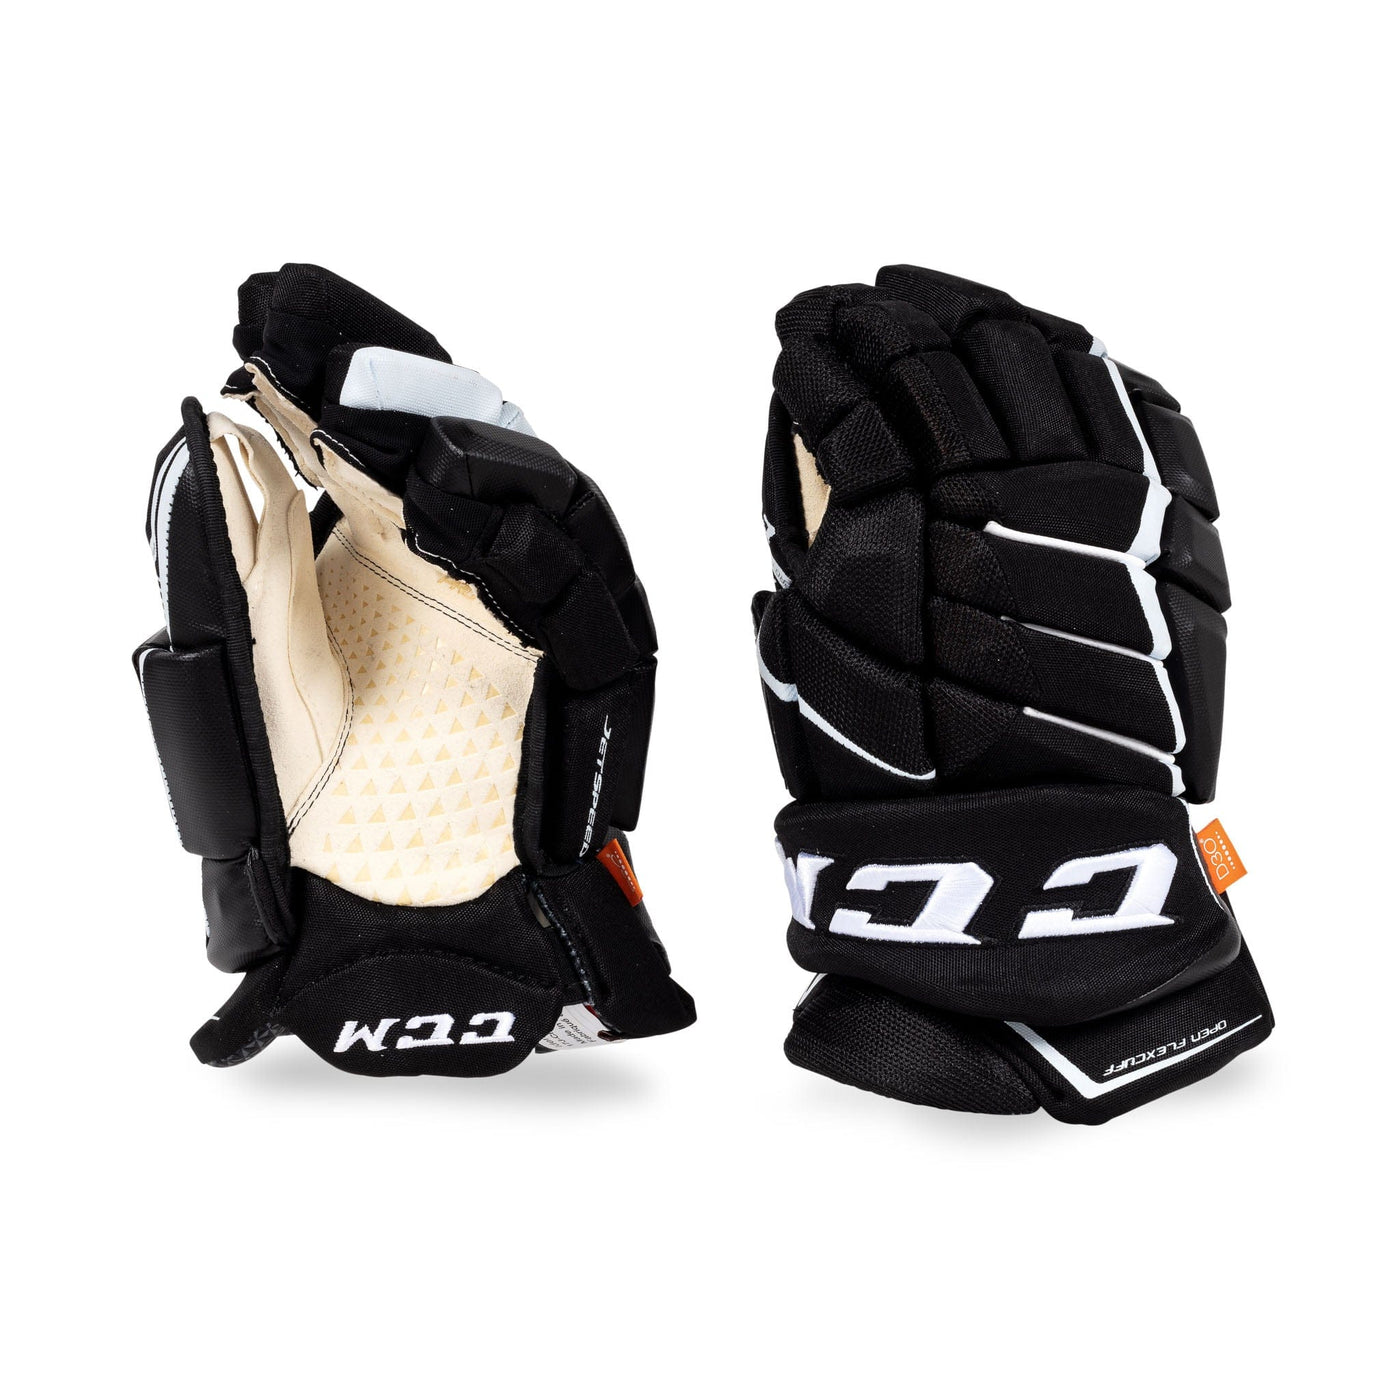 CCM Jetspeed FT1 Senior Hockey Gloves